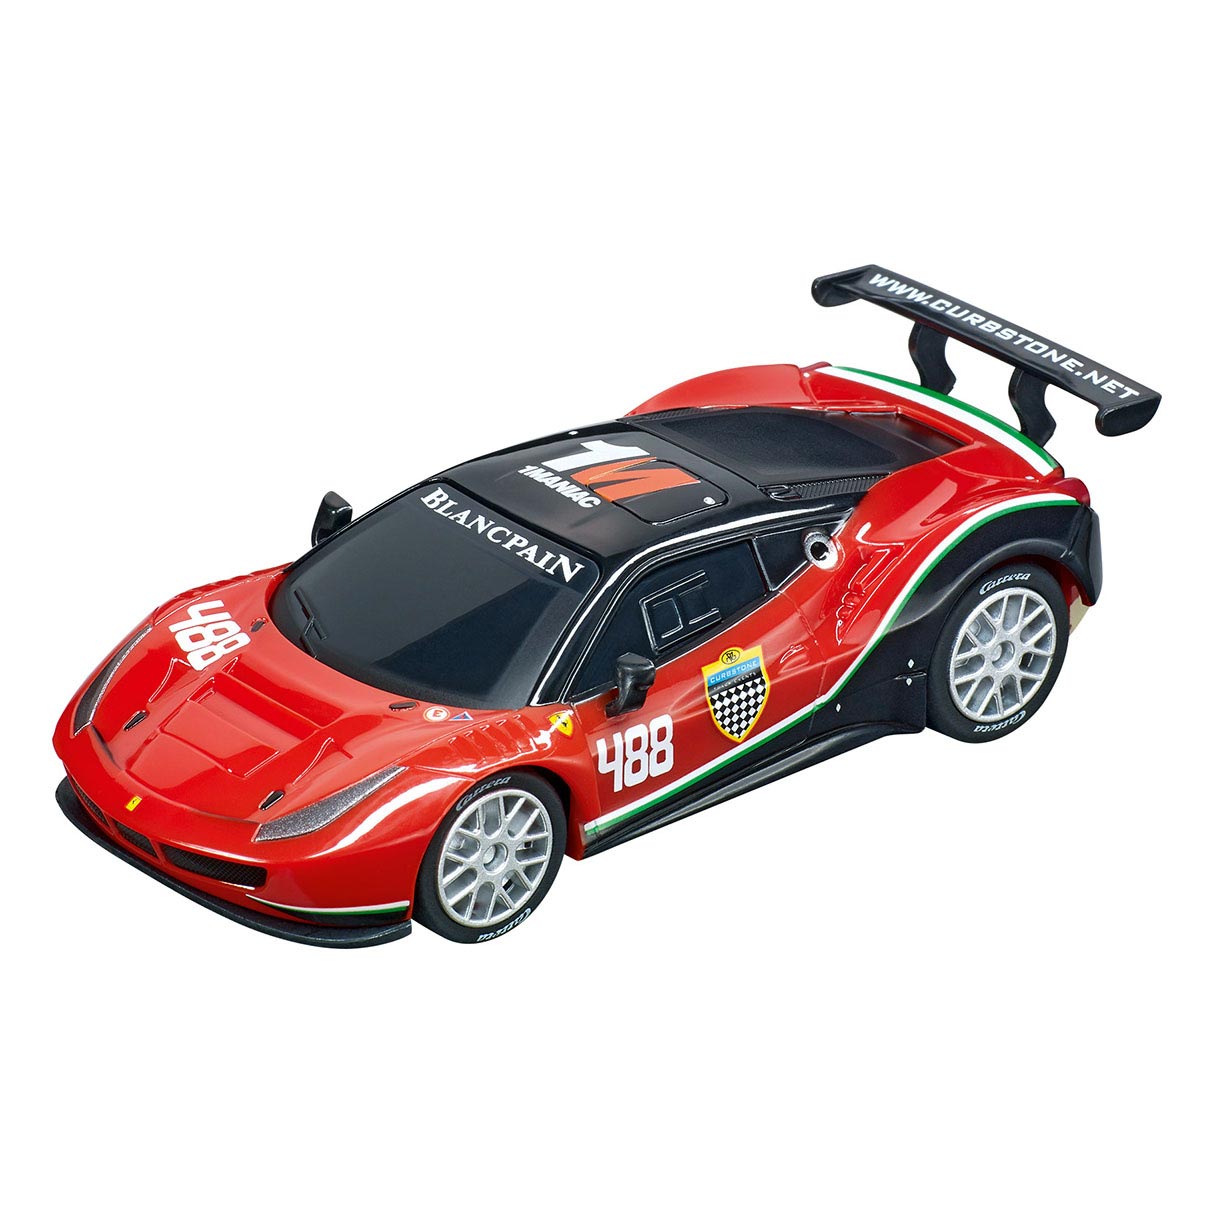 Circuit Ferrari GT3 Carrera GO !!!